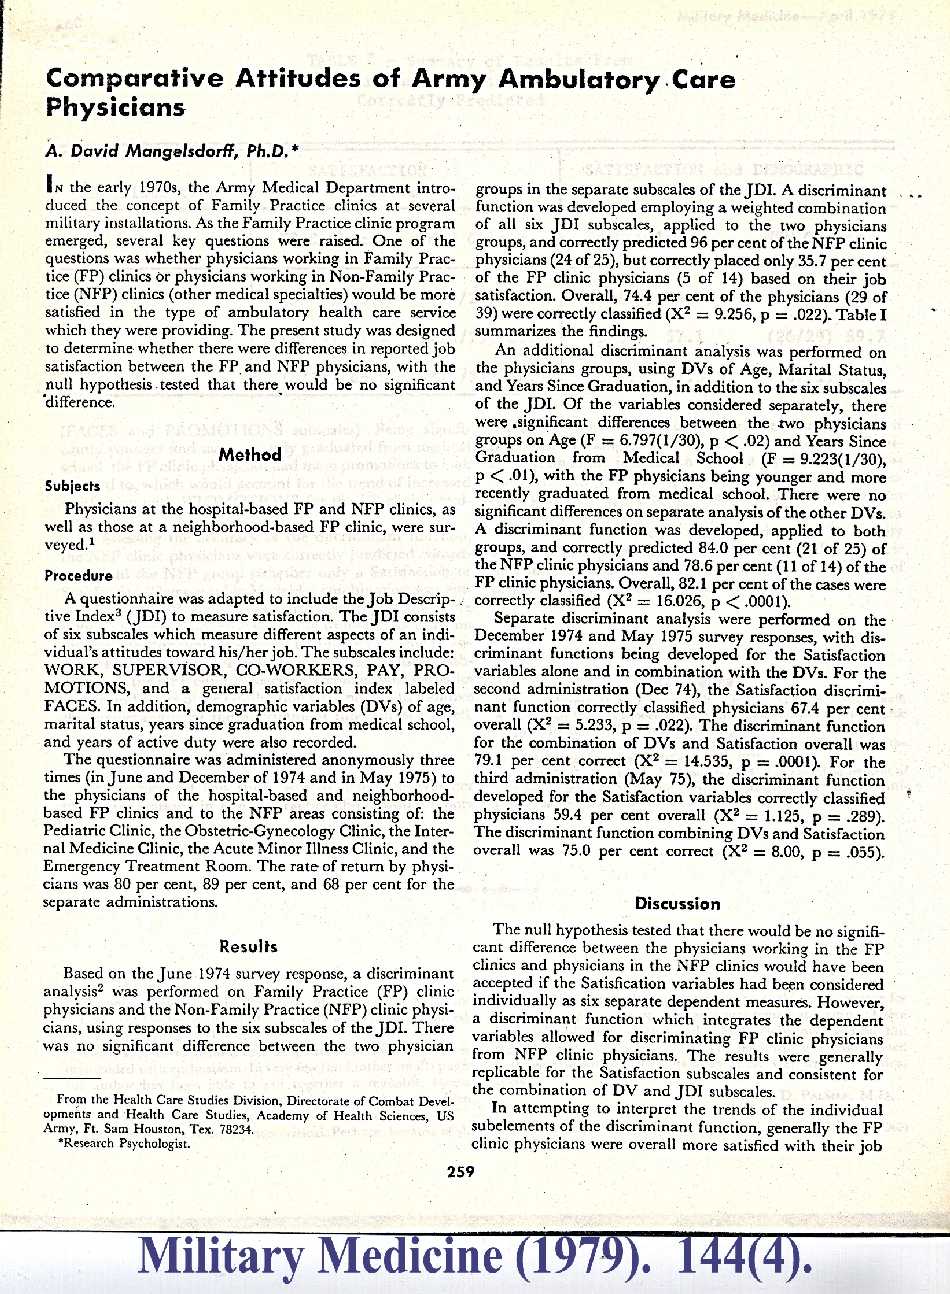 Military Medicine (1979): Comparative attitudes of Army ambulatory care physicians